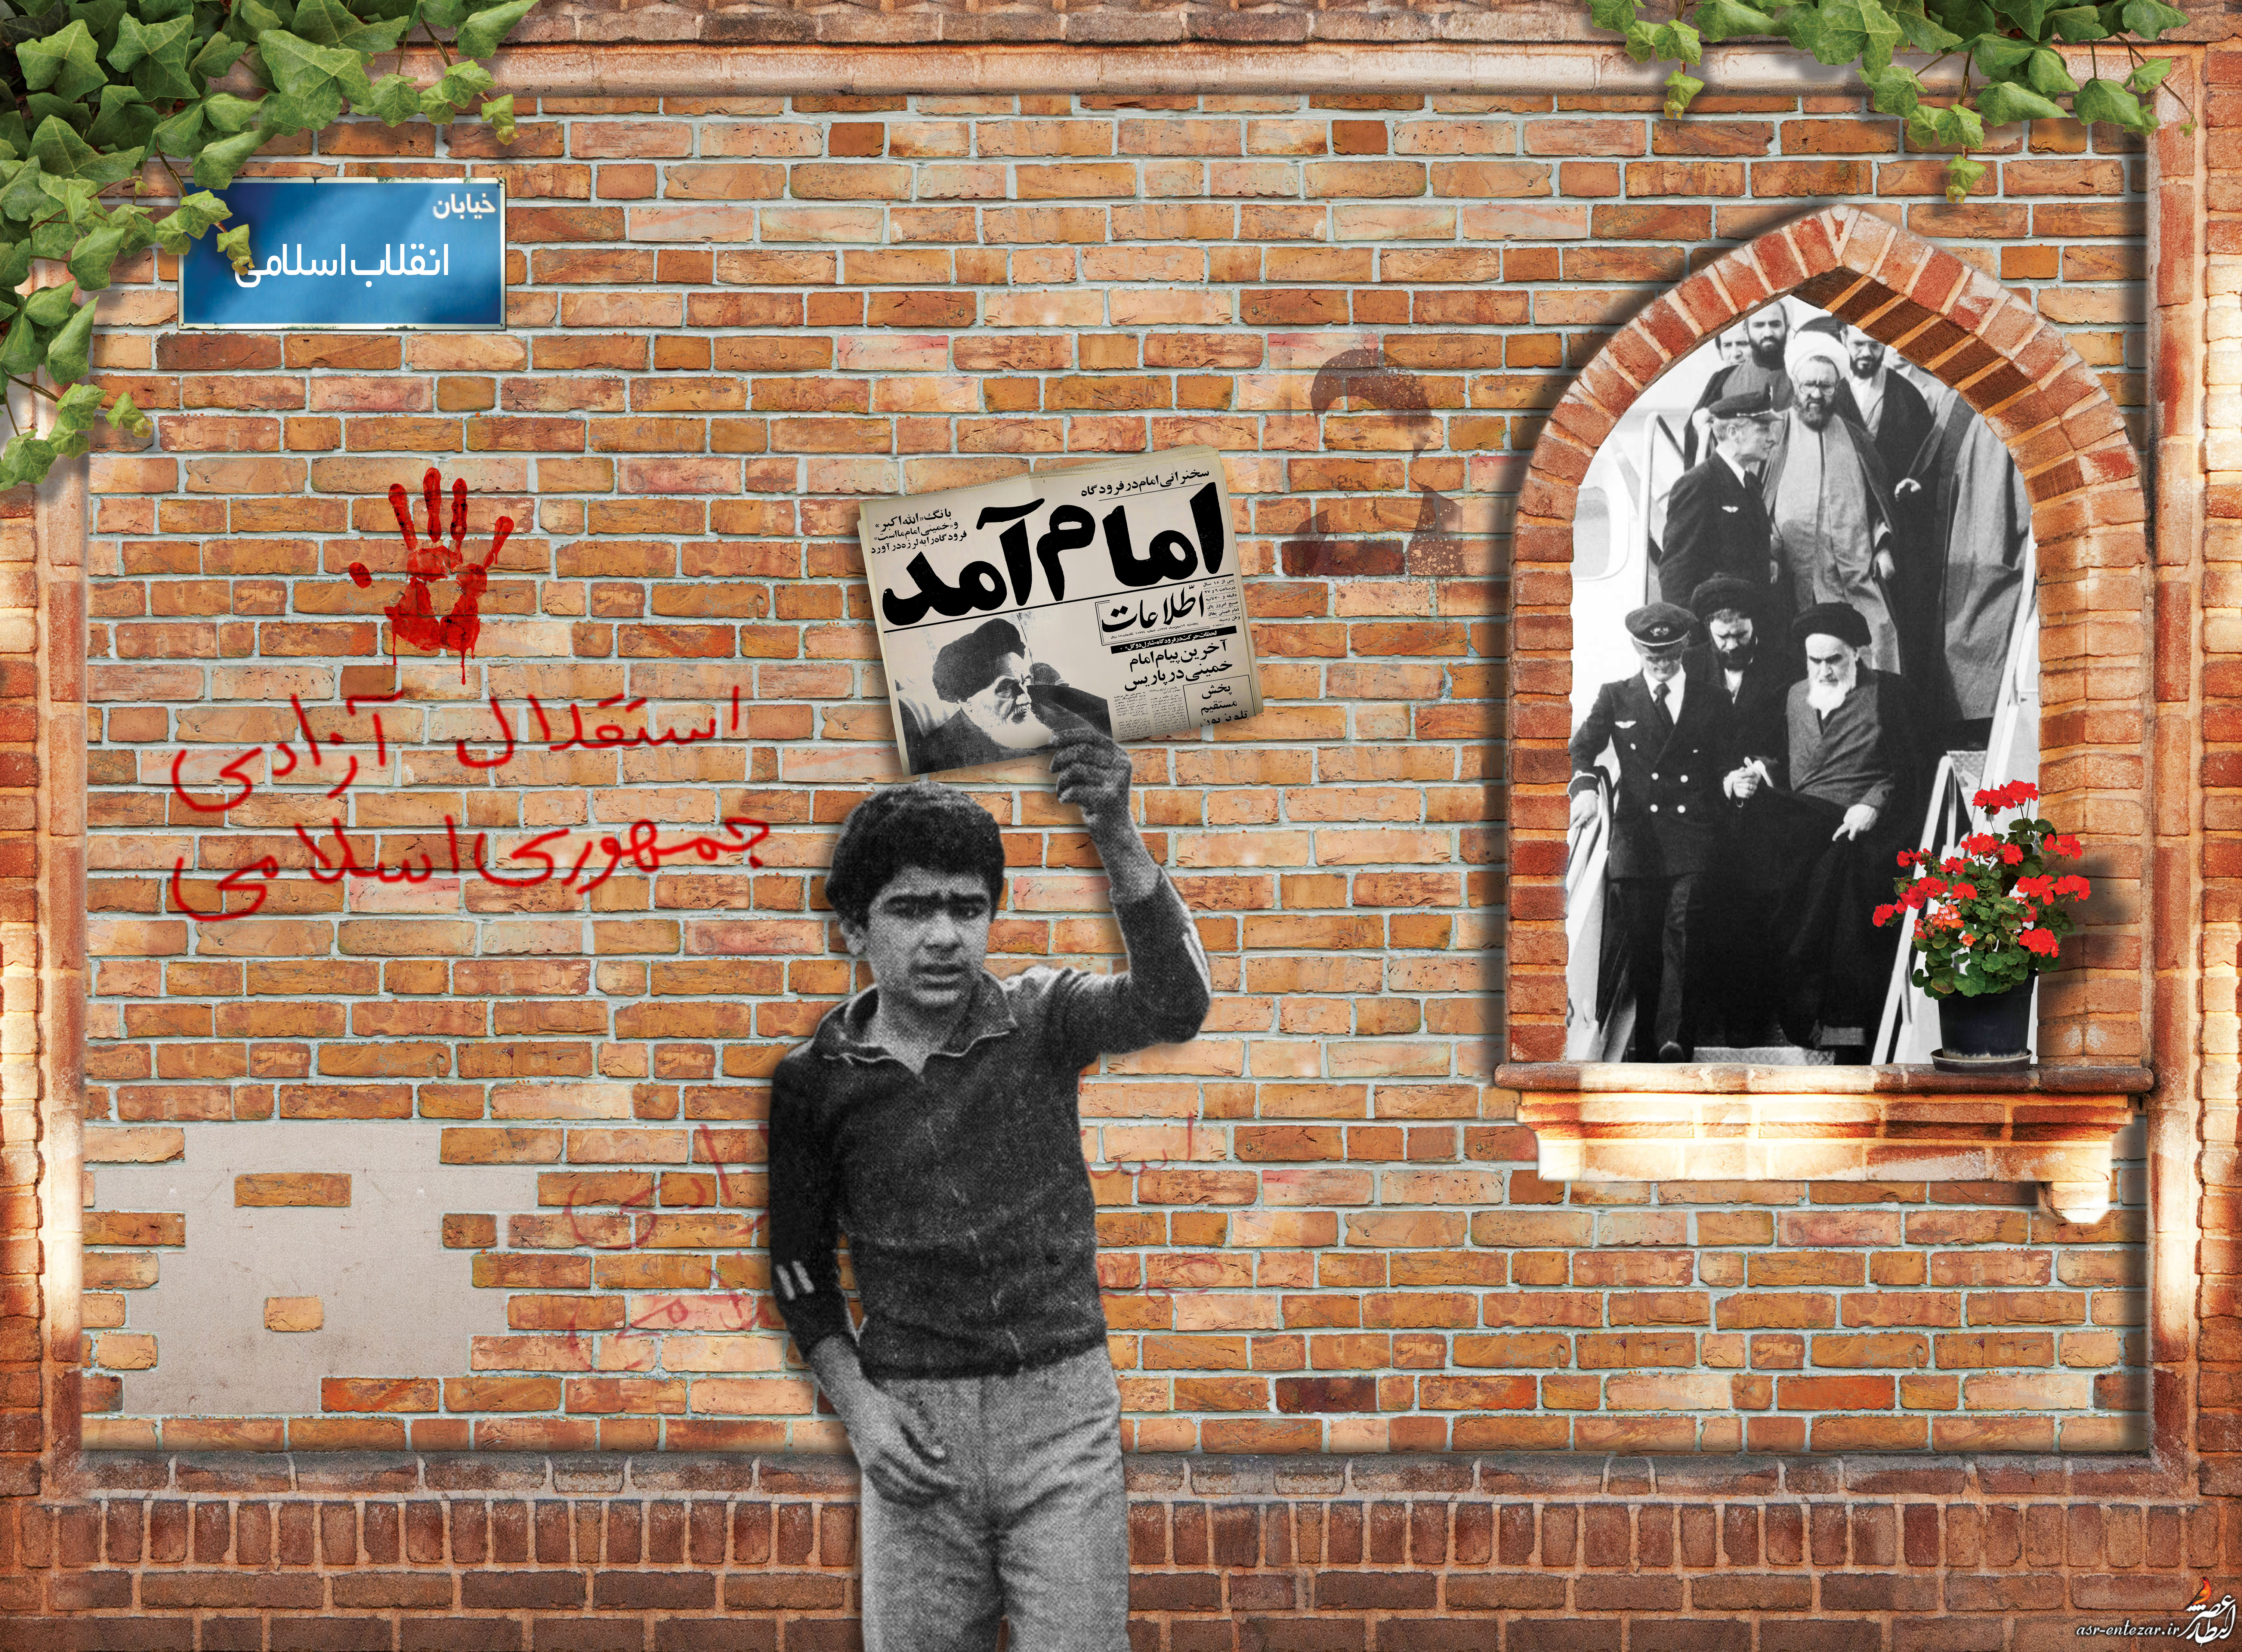 مجموعه تصاویر ویژه دهه فجر انقلاب اسلامی